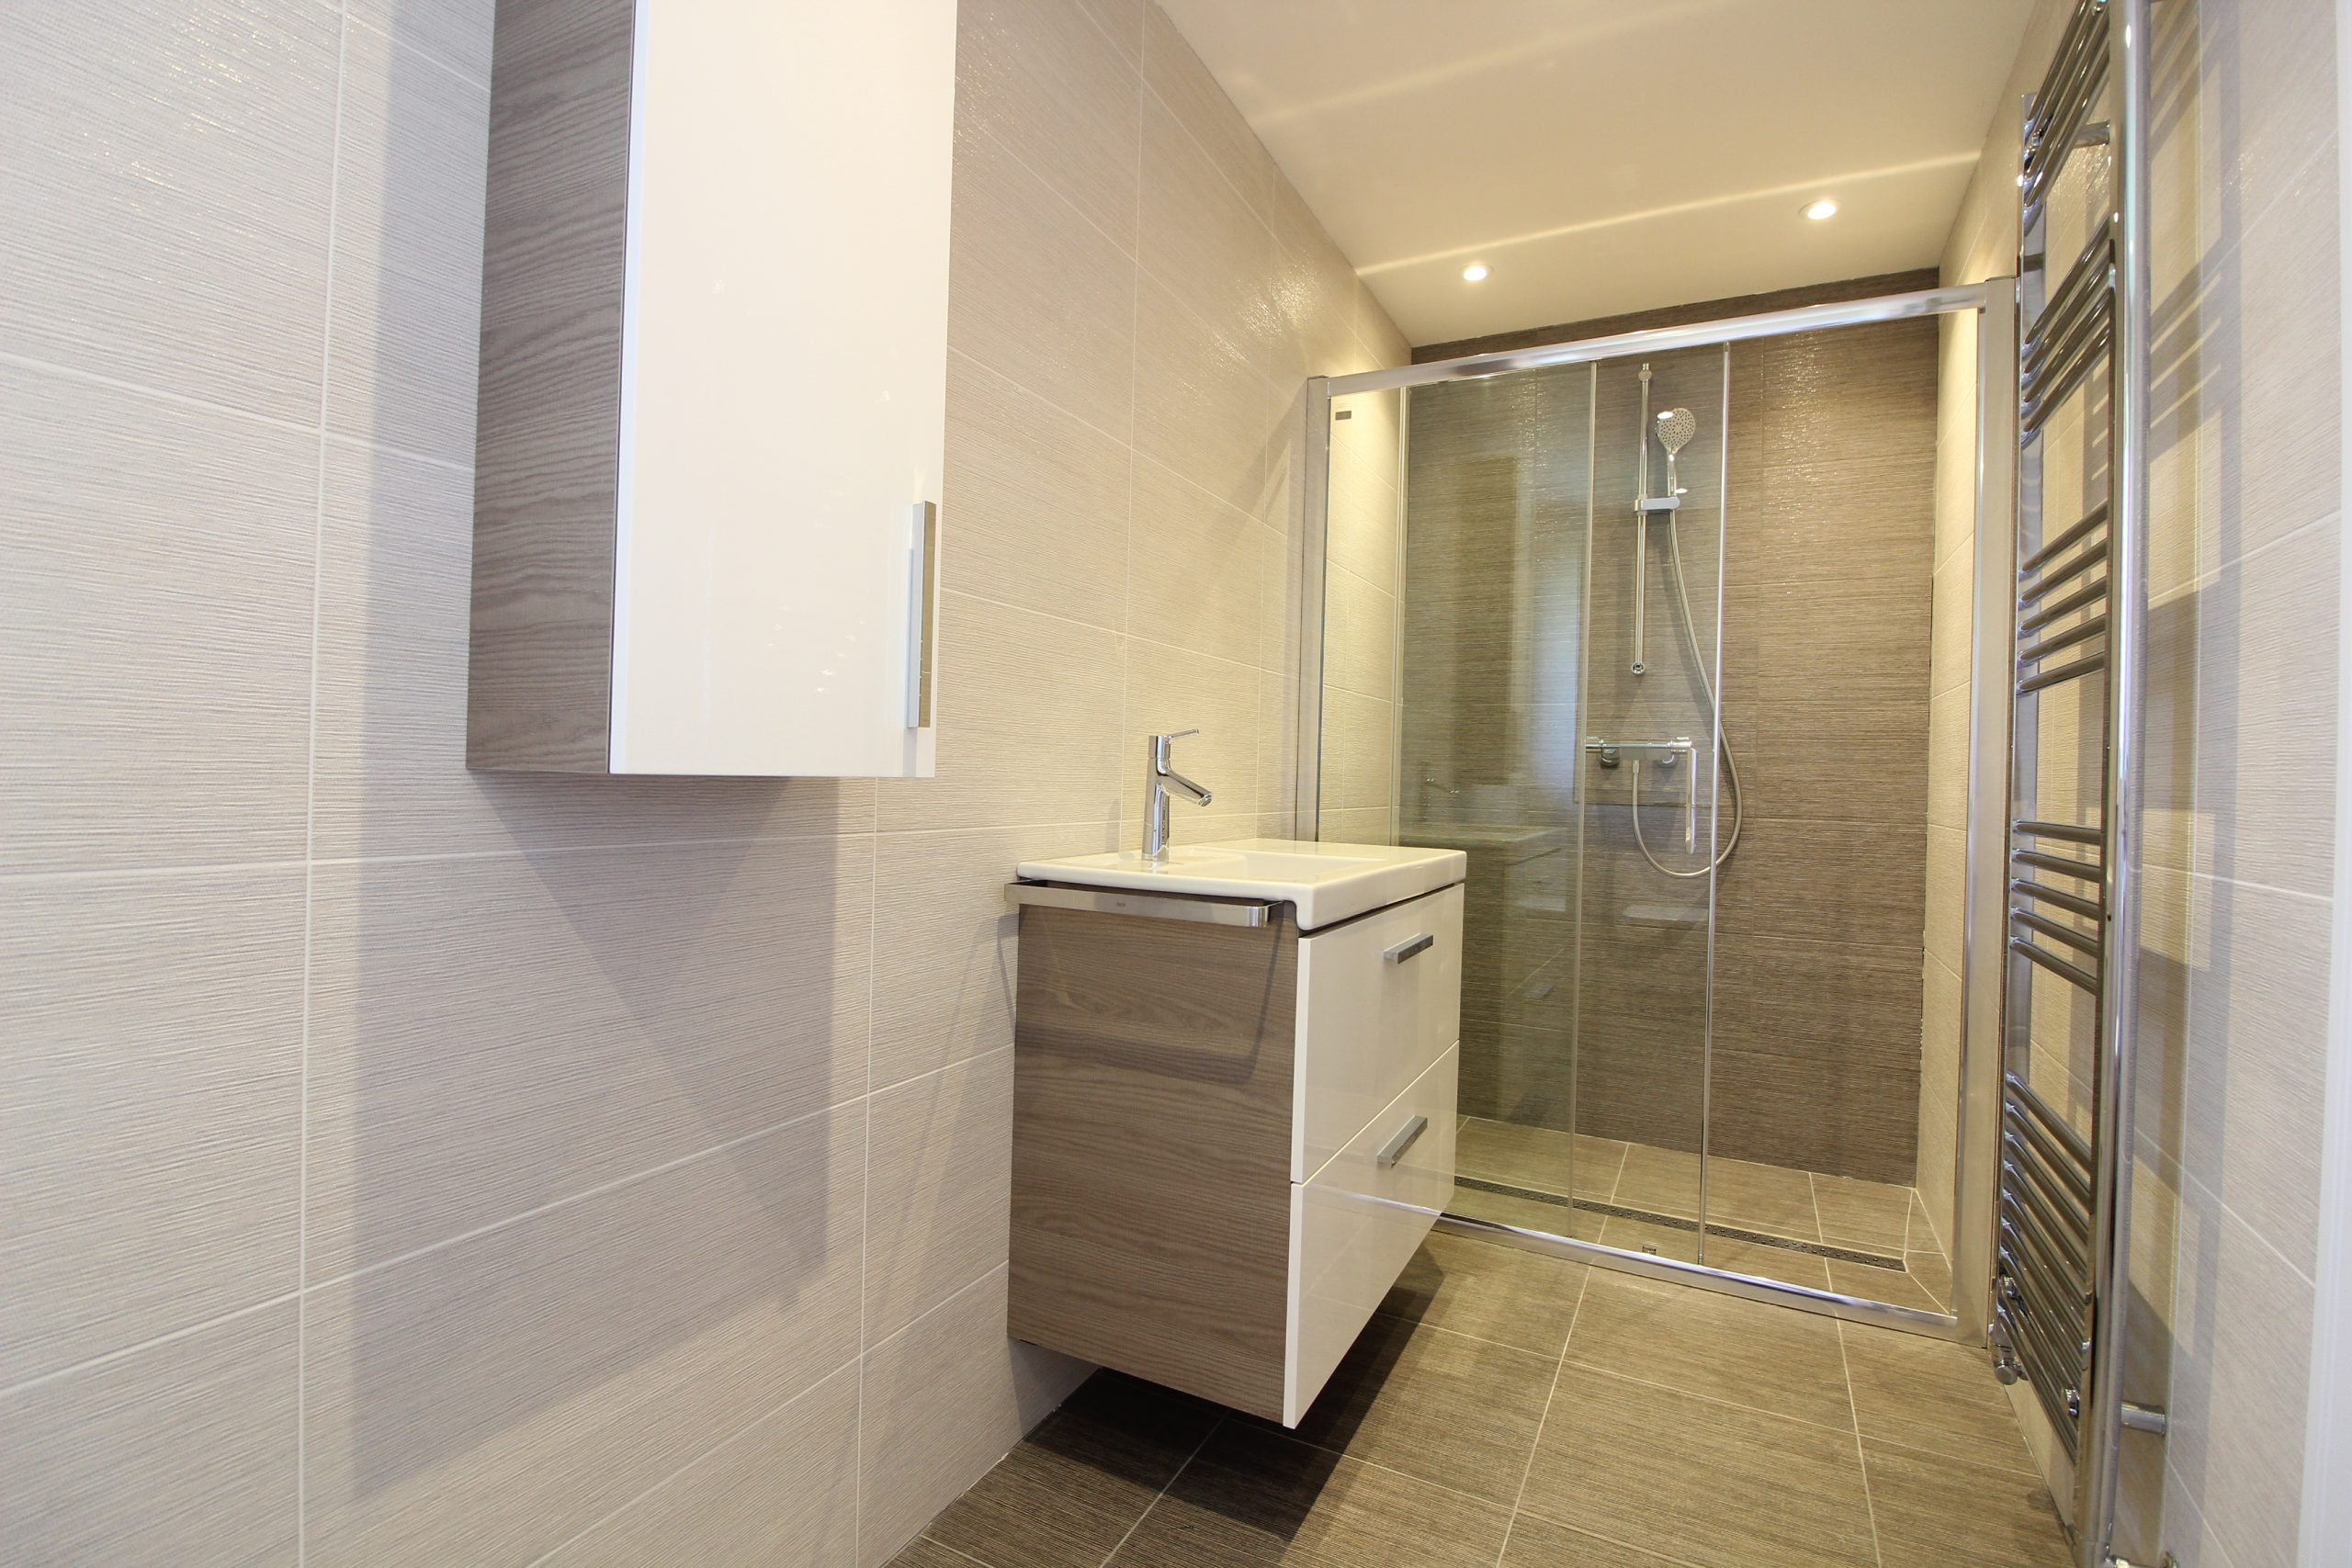 Modern tiled clarendon bathroom